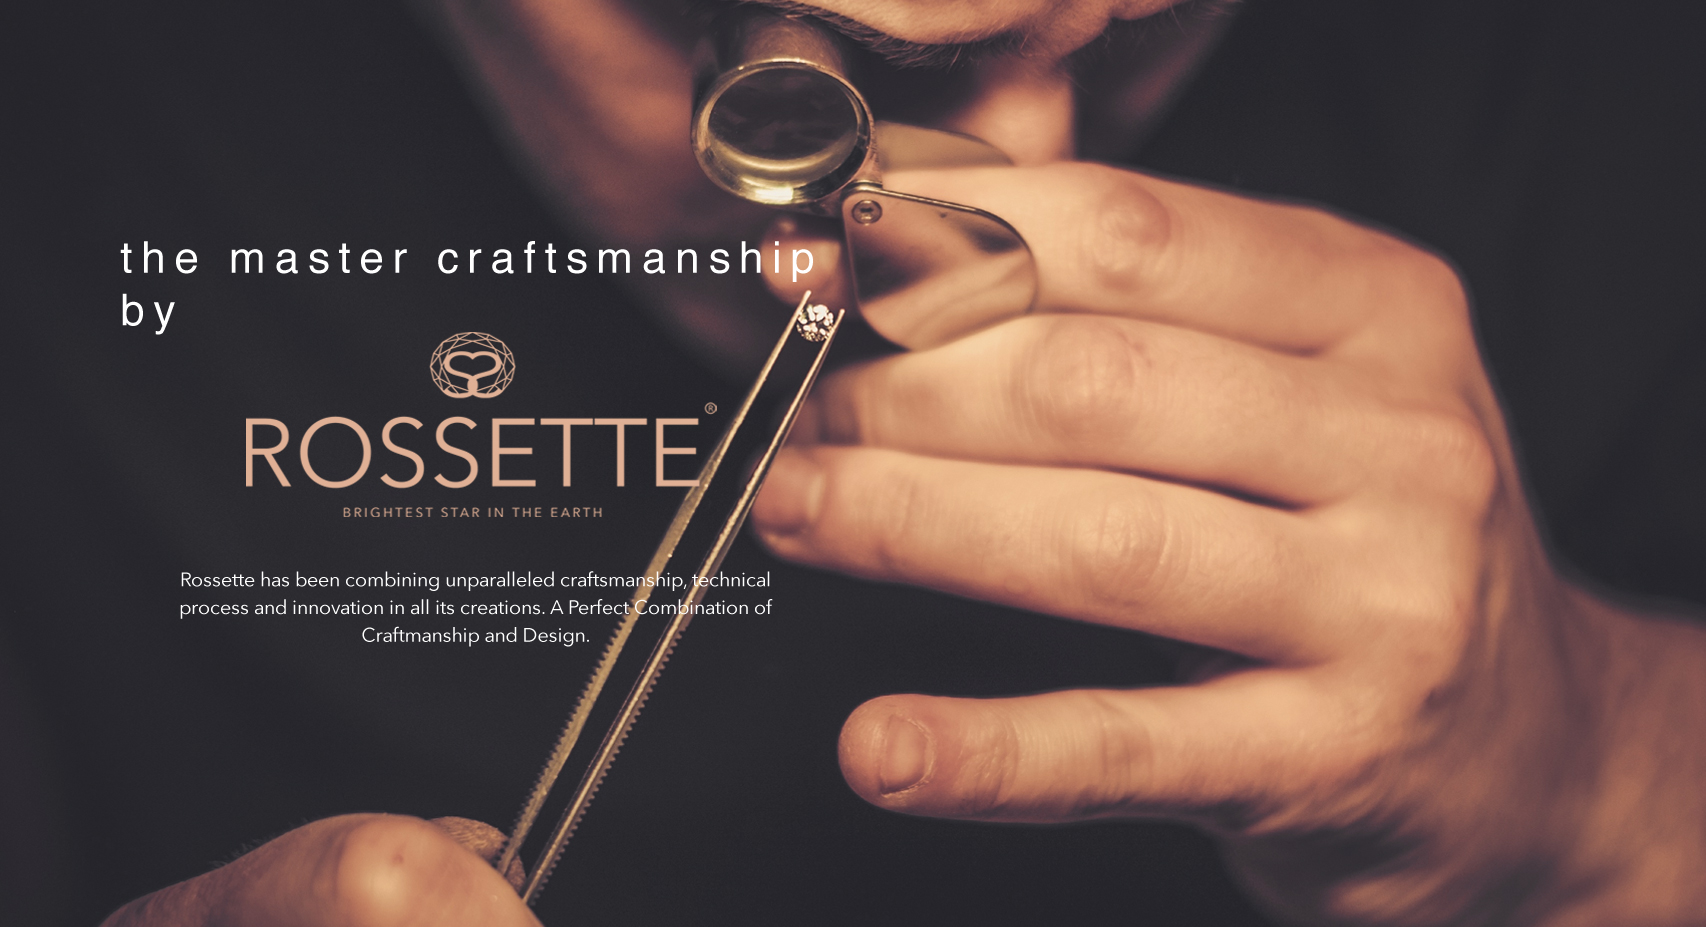 The master craftsmanship by Rossette